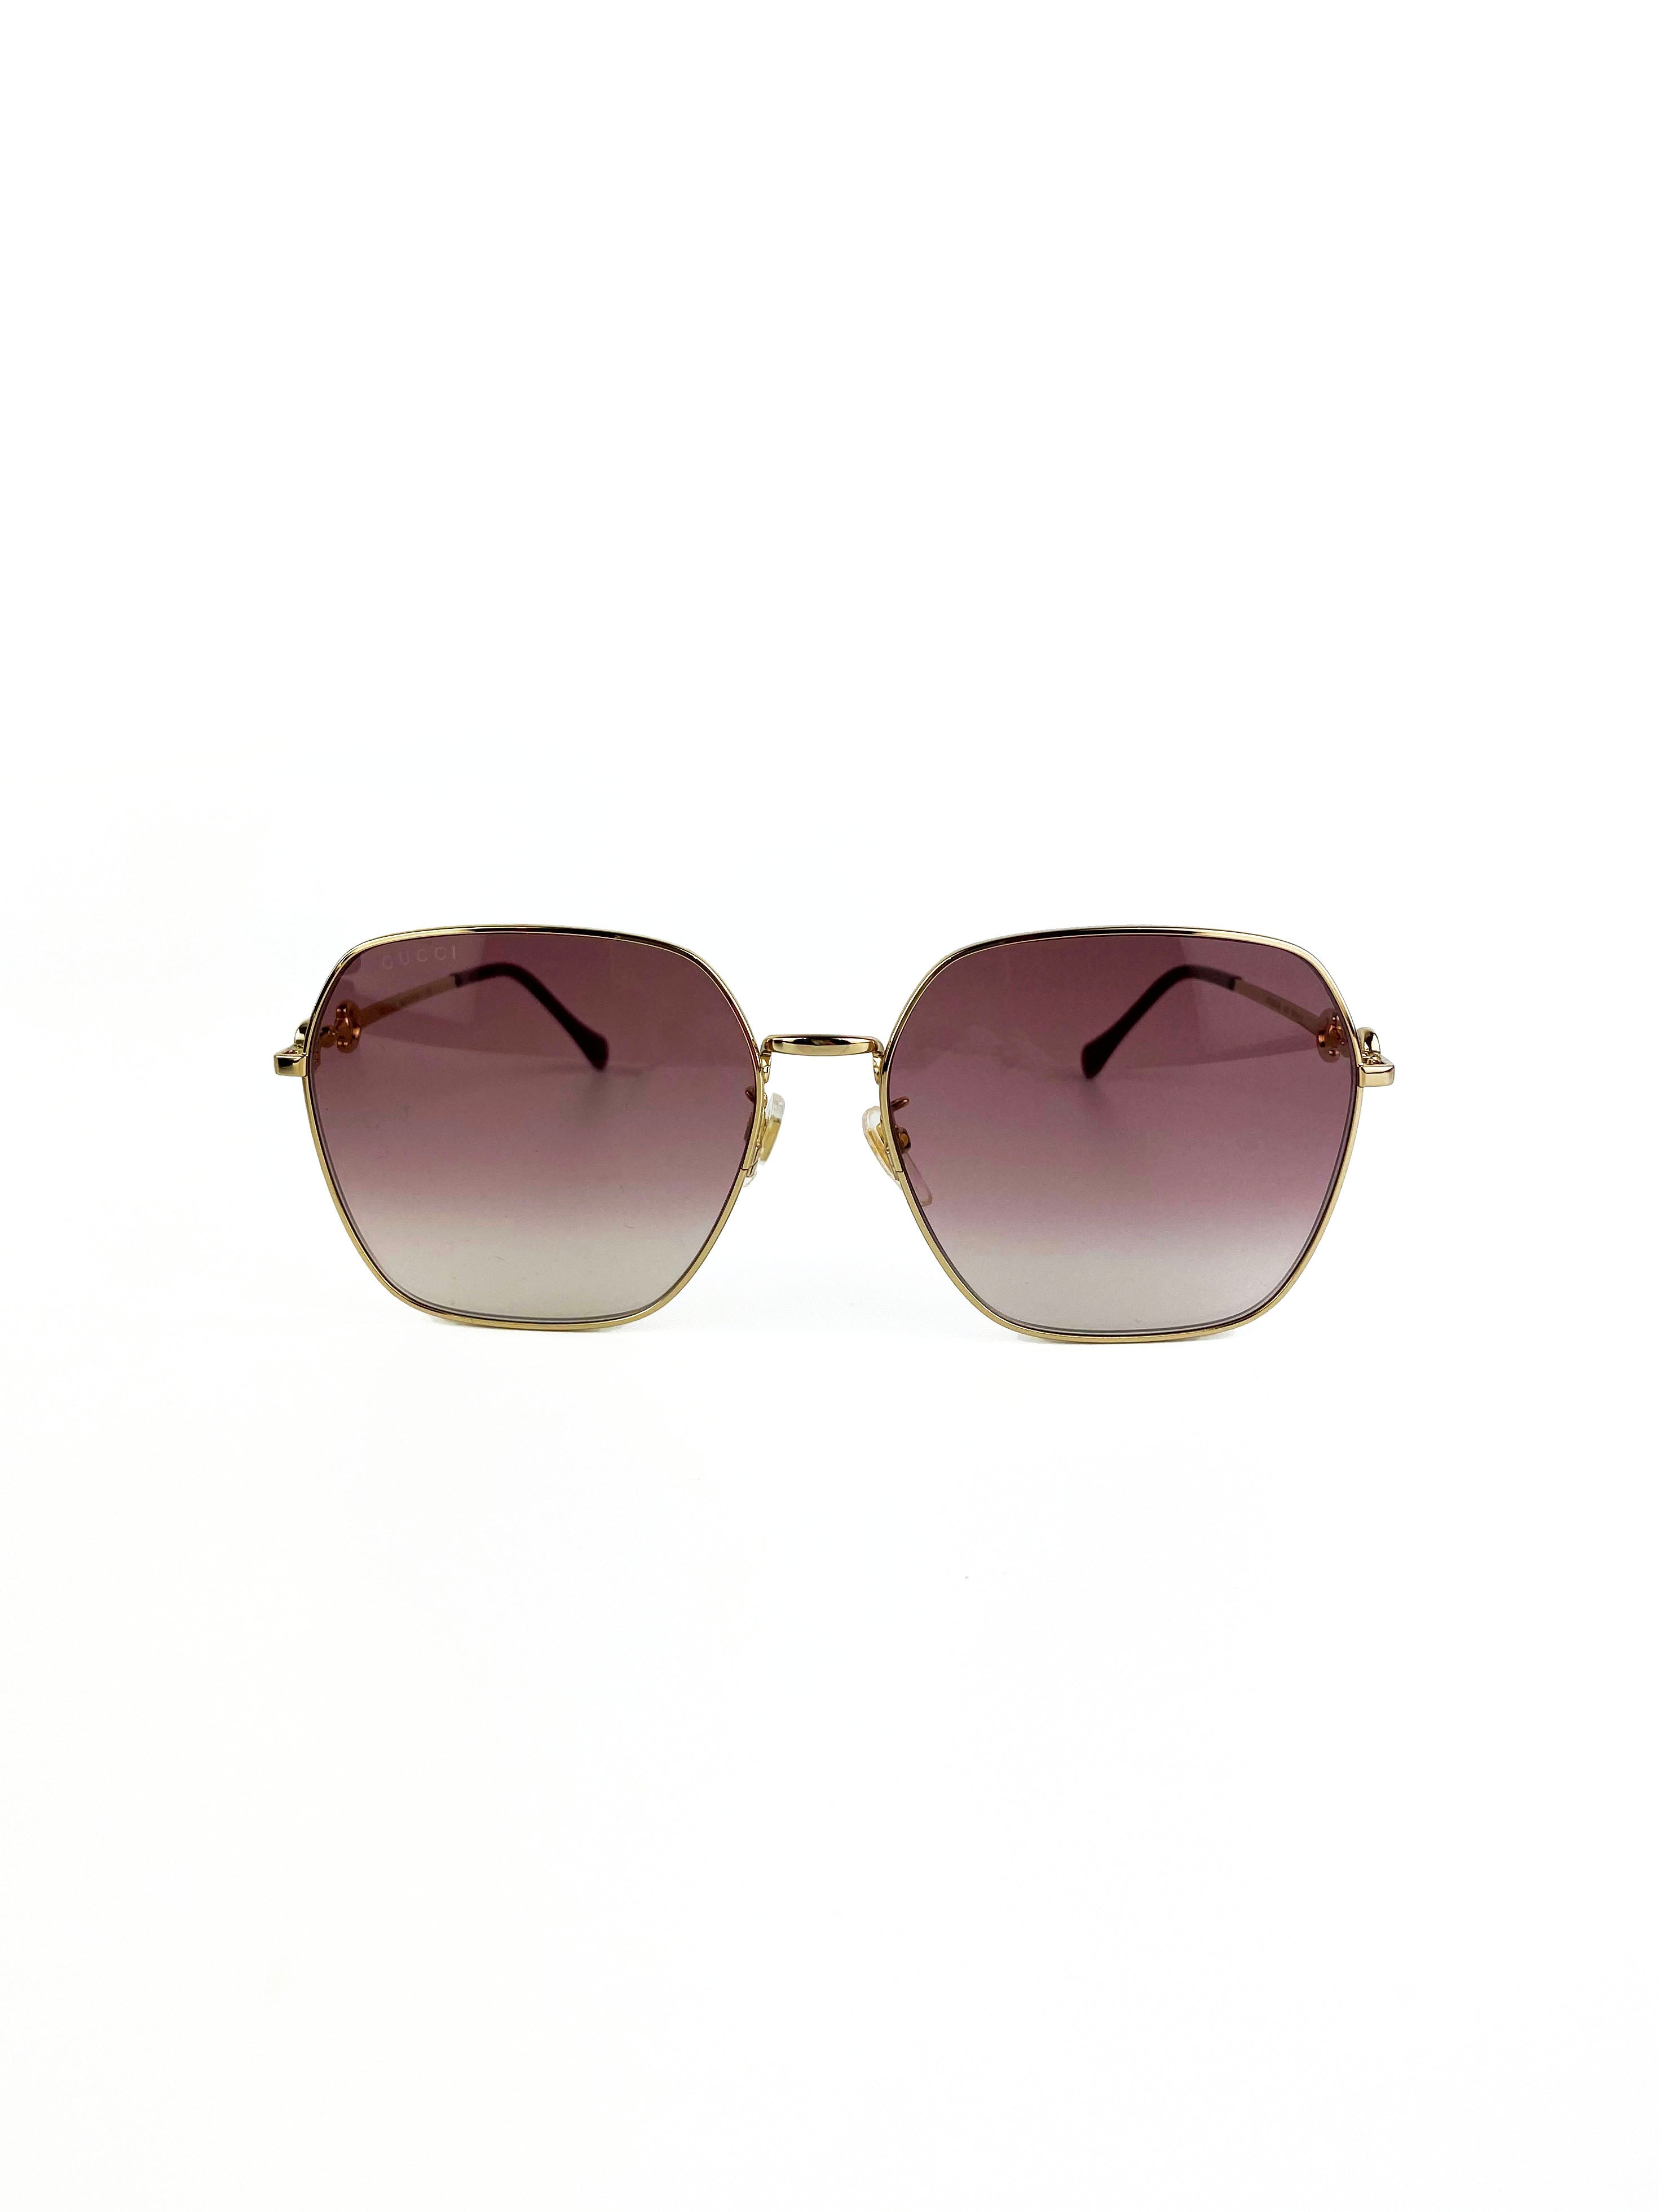 gucci-large-sunglasses-1.jpg